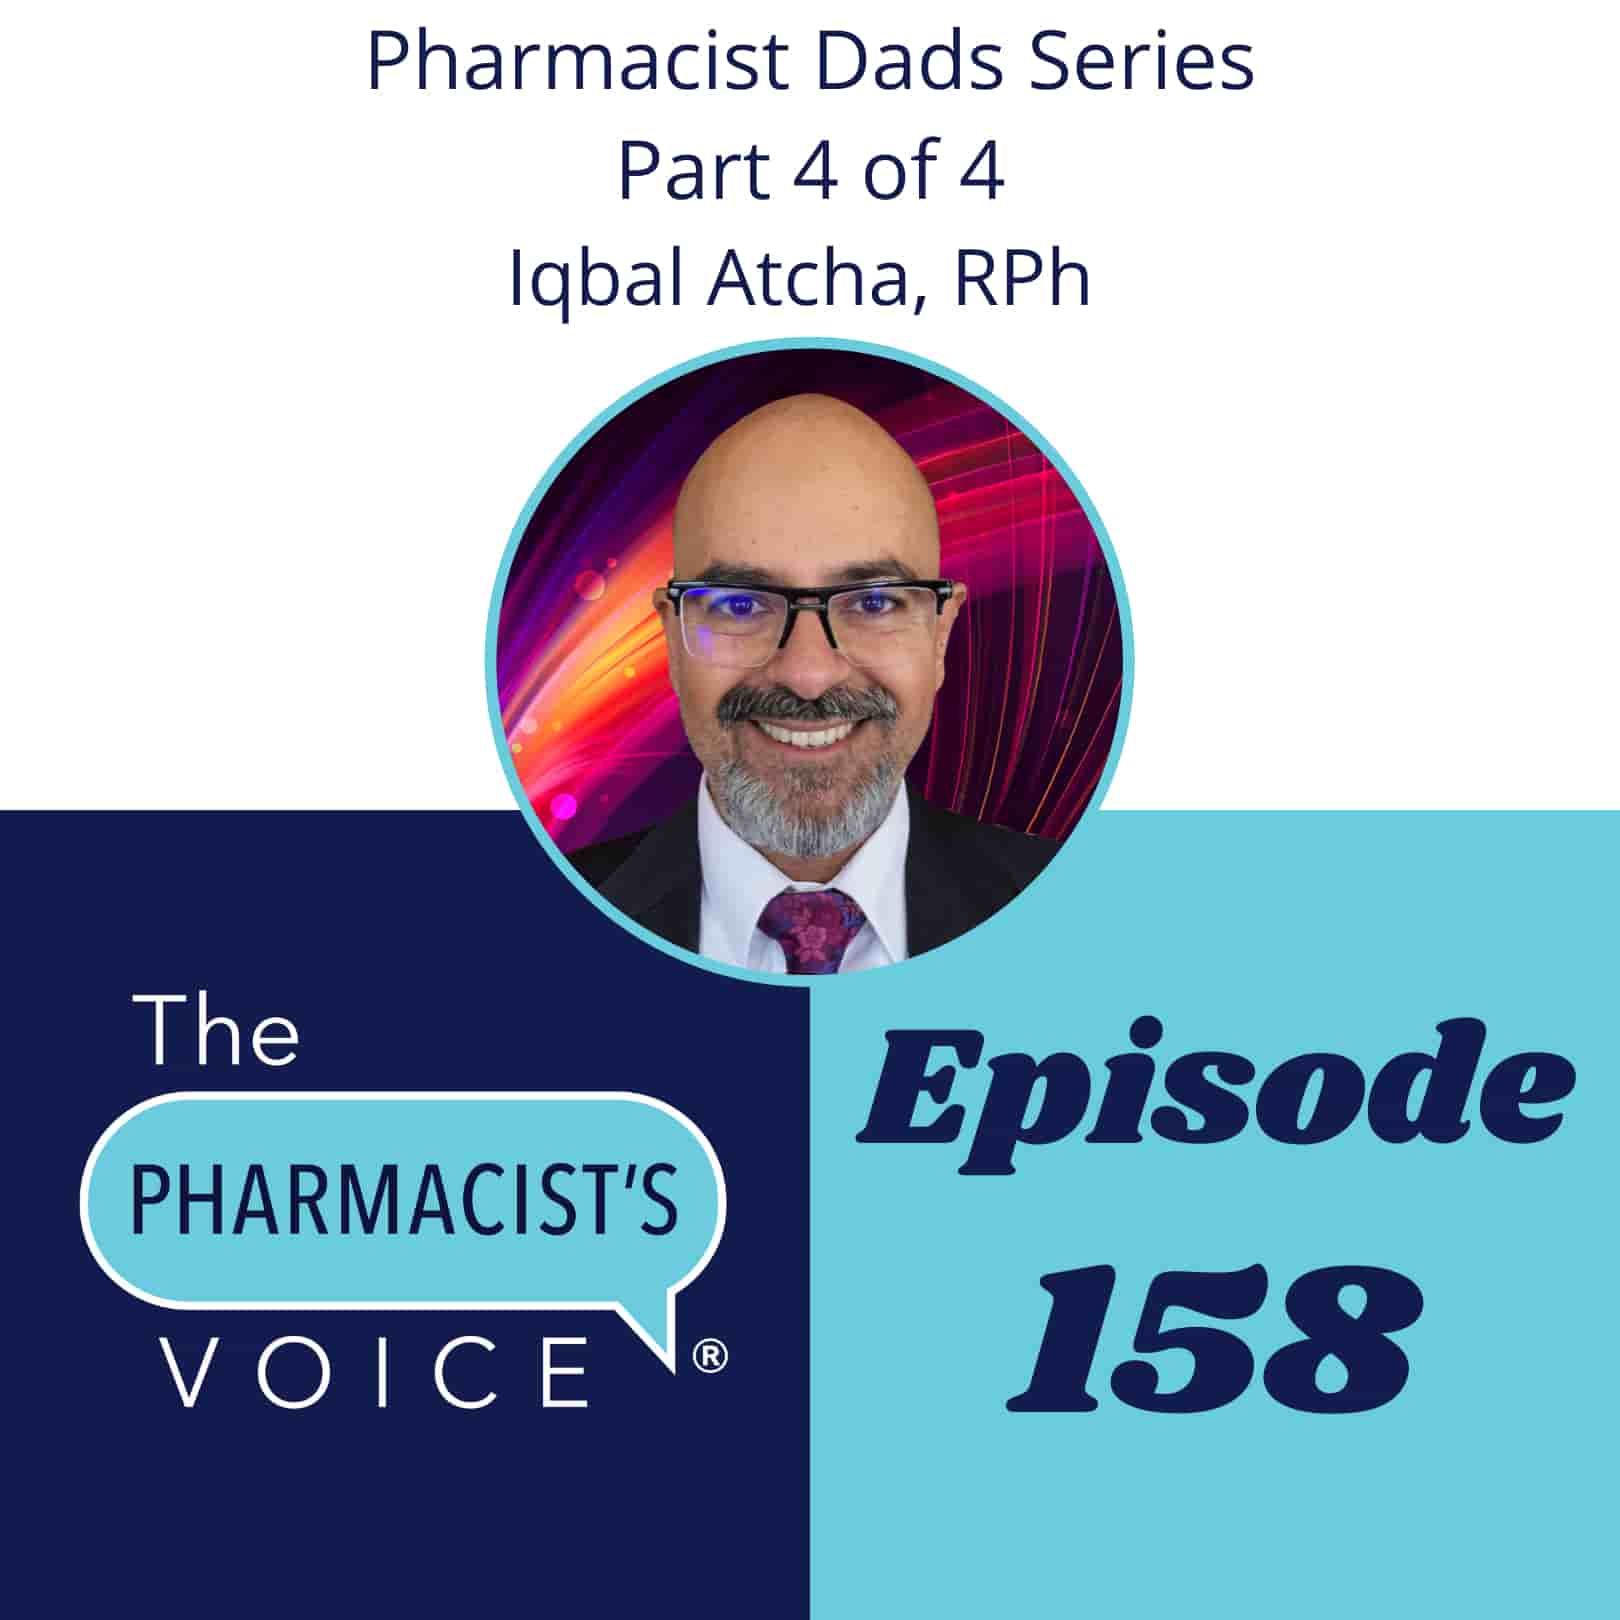 The Pharmacist's Voice Podcast https://www.thepharmacistsvoice.com